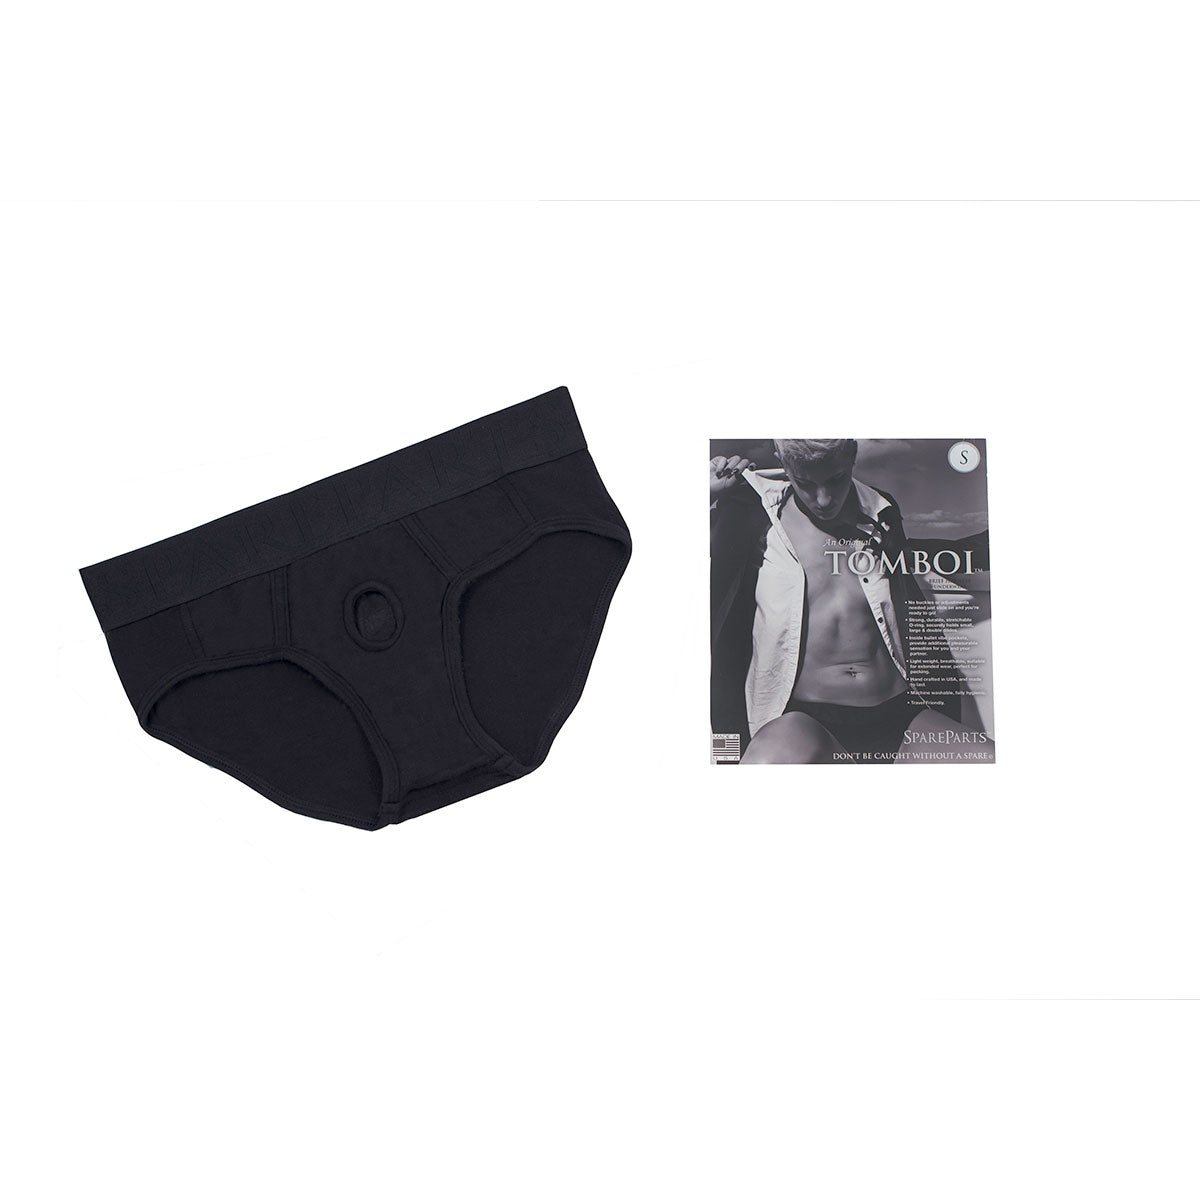 SpareParts Tomboi Harness Black-Black Rayon - Large Intimates Adult Boutique